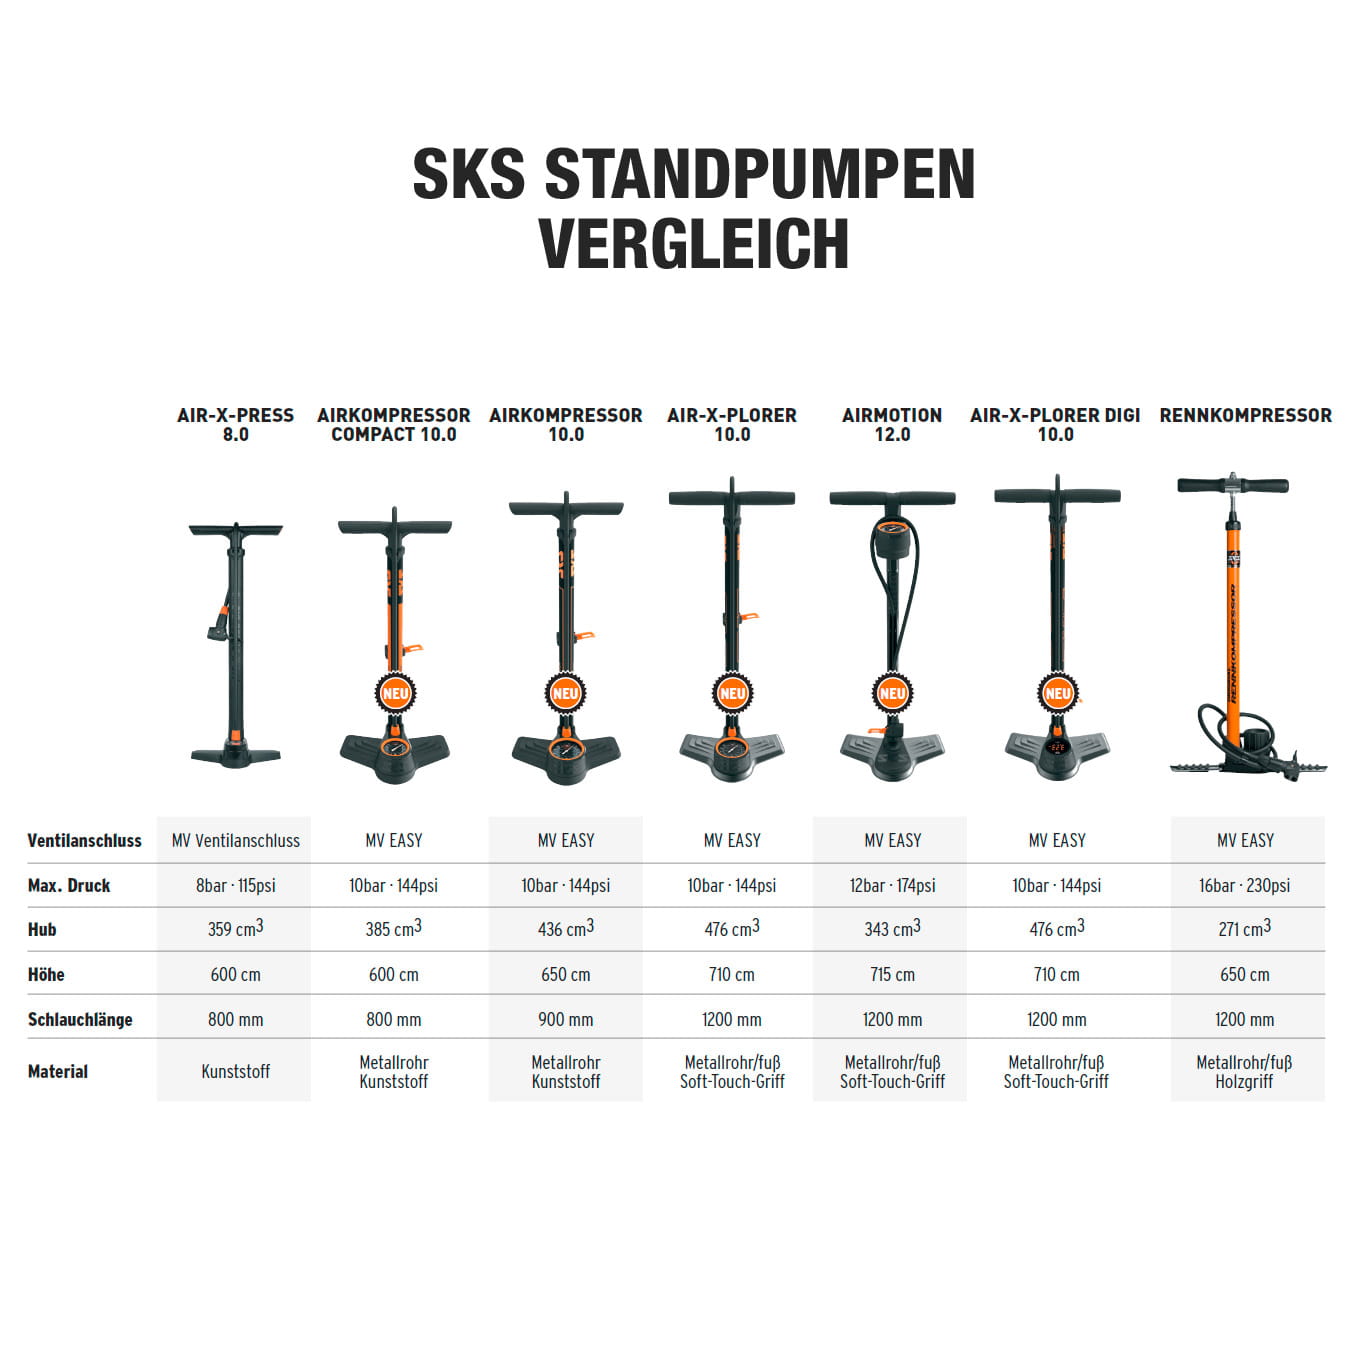 SKS Airmotion 12.0 Standpumpe